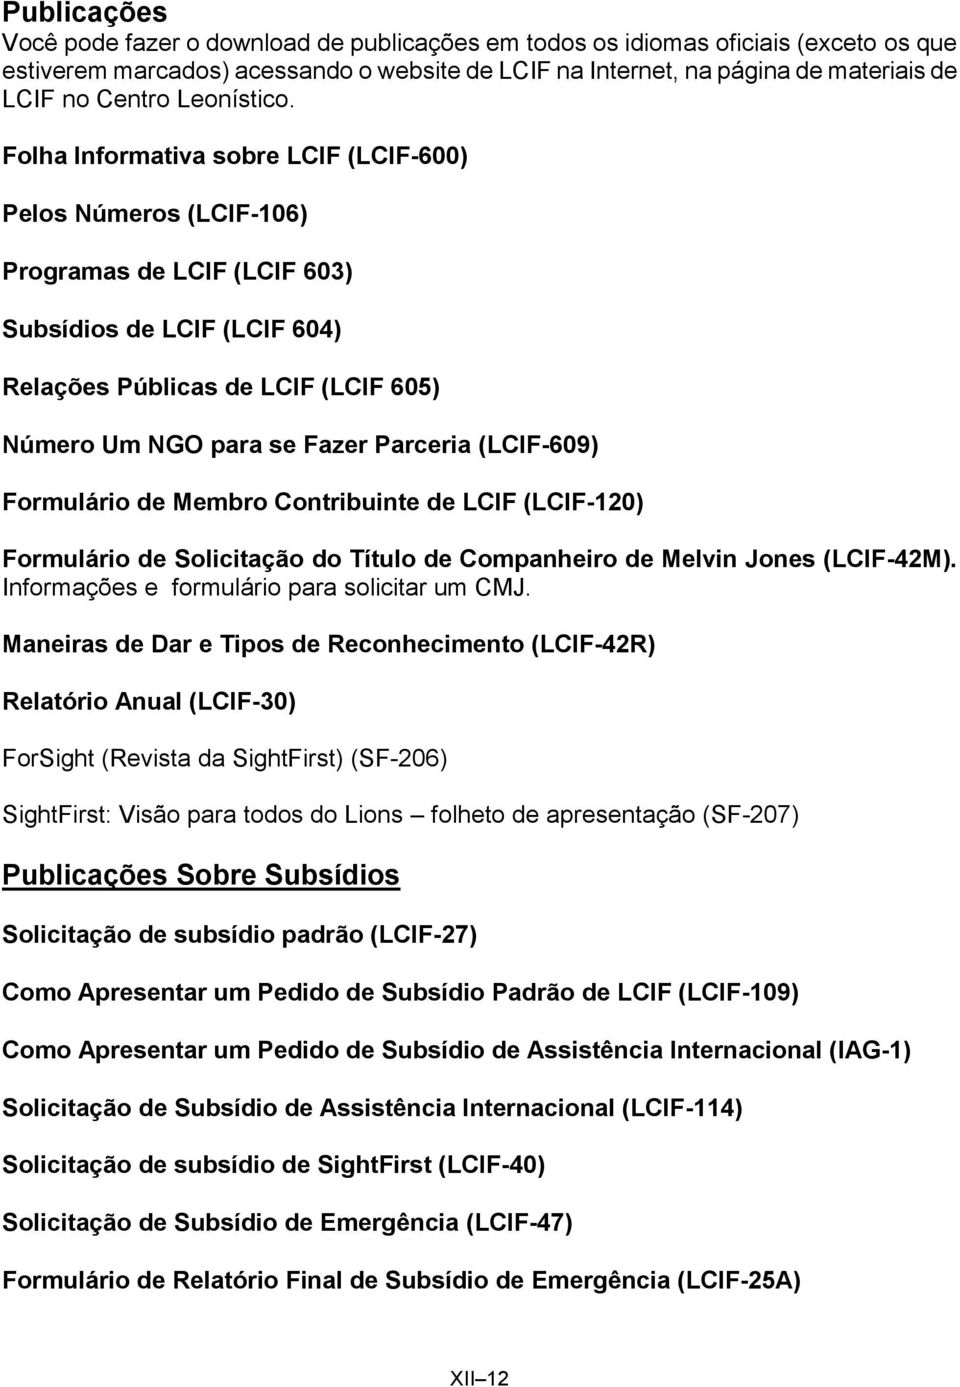 Folha Informativa sobre LCIF (LCIF-600) Pelos Números (LCIF-106) Programas de LCIF (LCIF 603) Subsídios de LCIF (LCIF 604) Relações Públicas de LCIF (LCIF 605) Número Um NGO para se Fazer Parceria